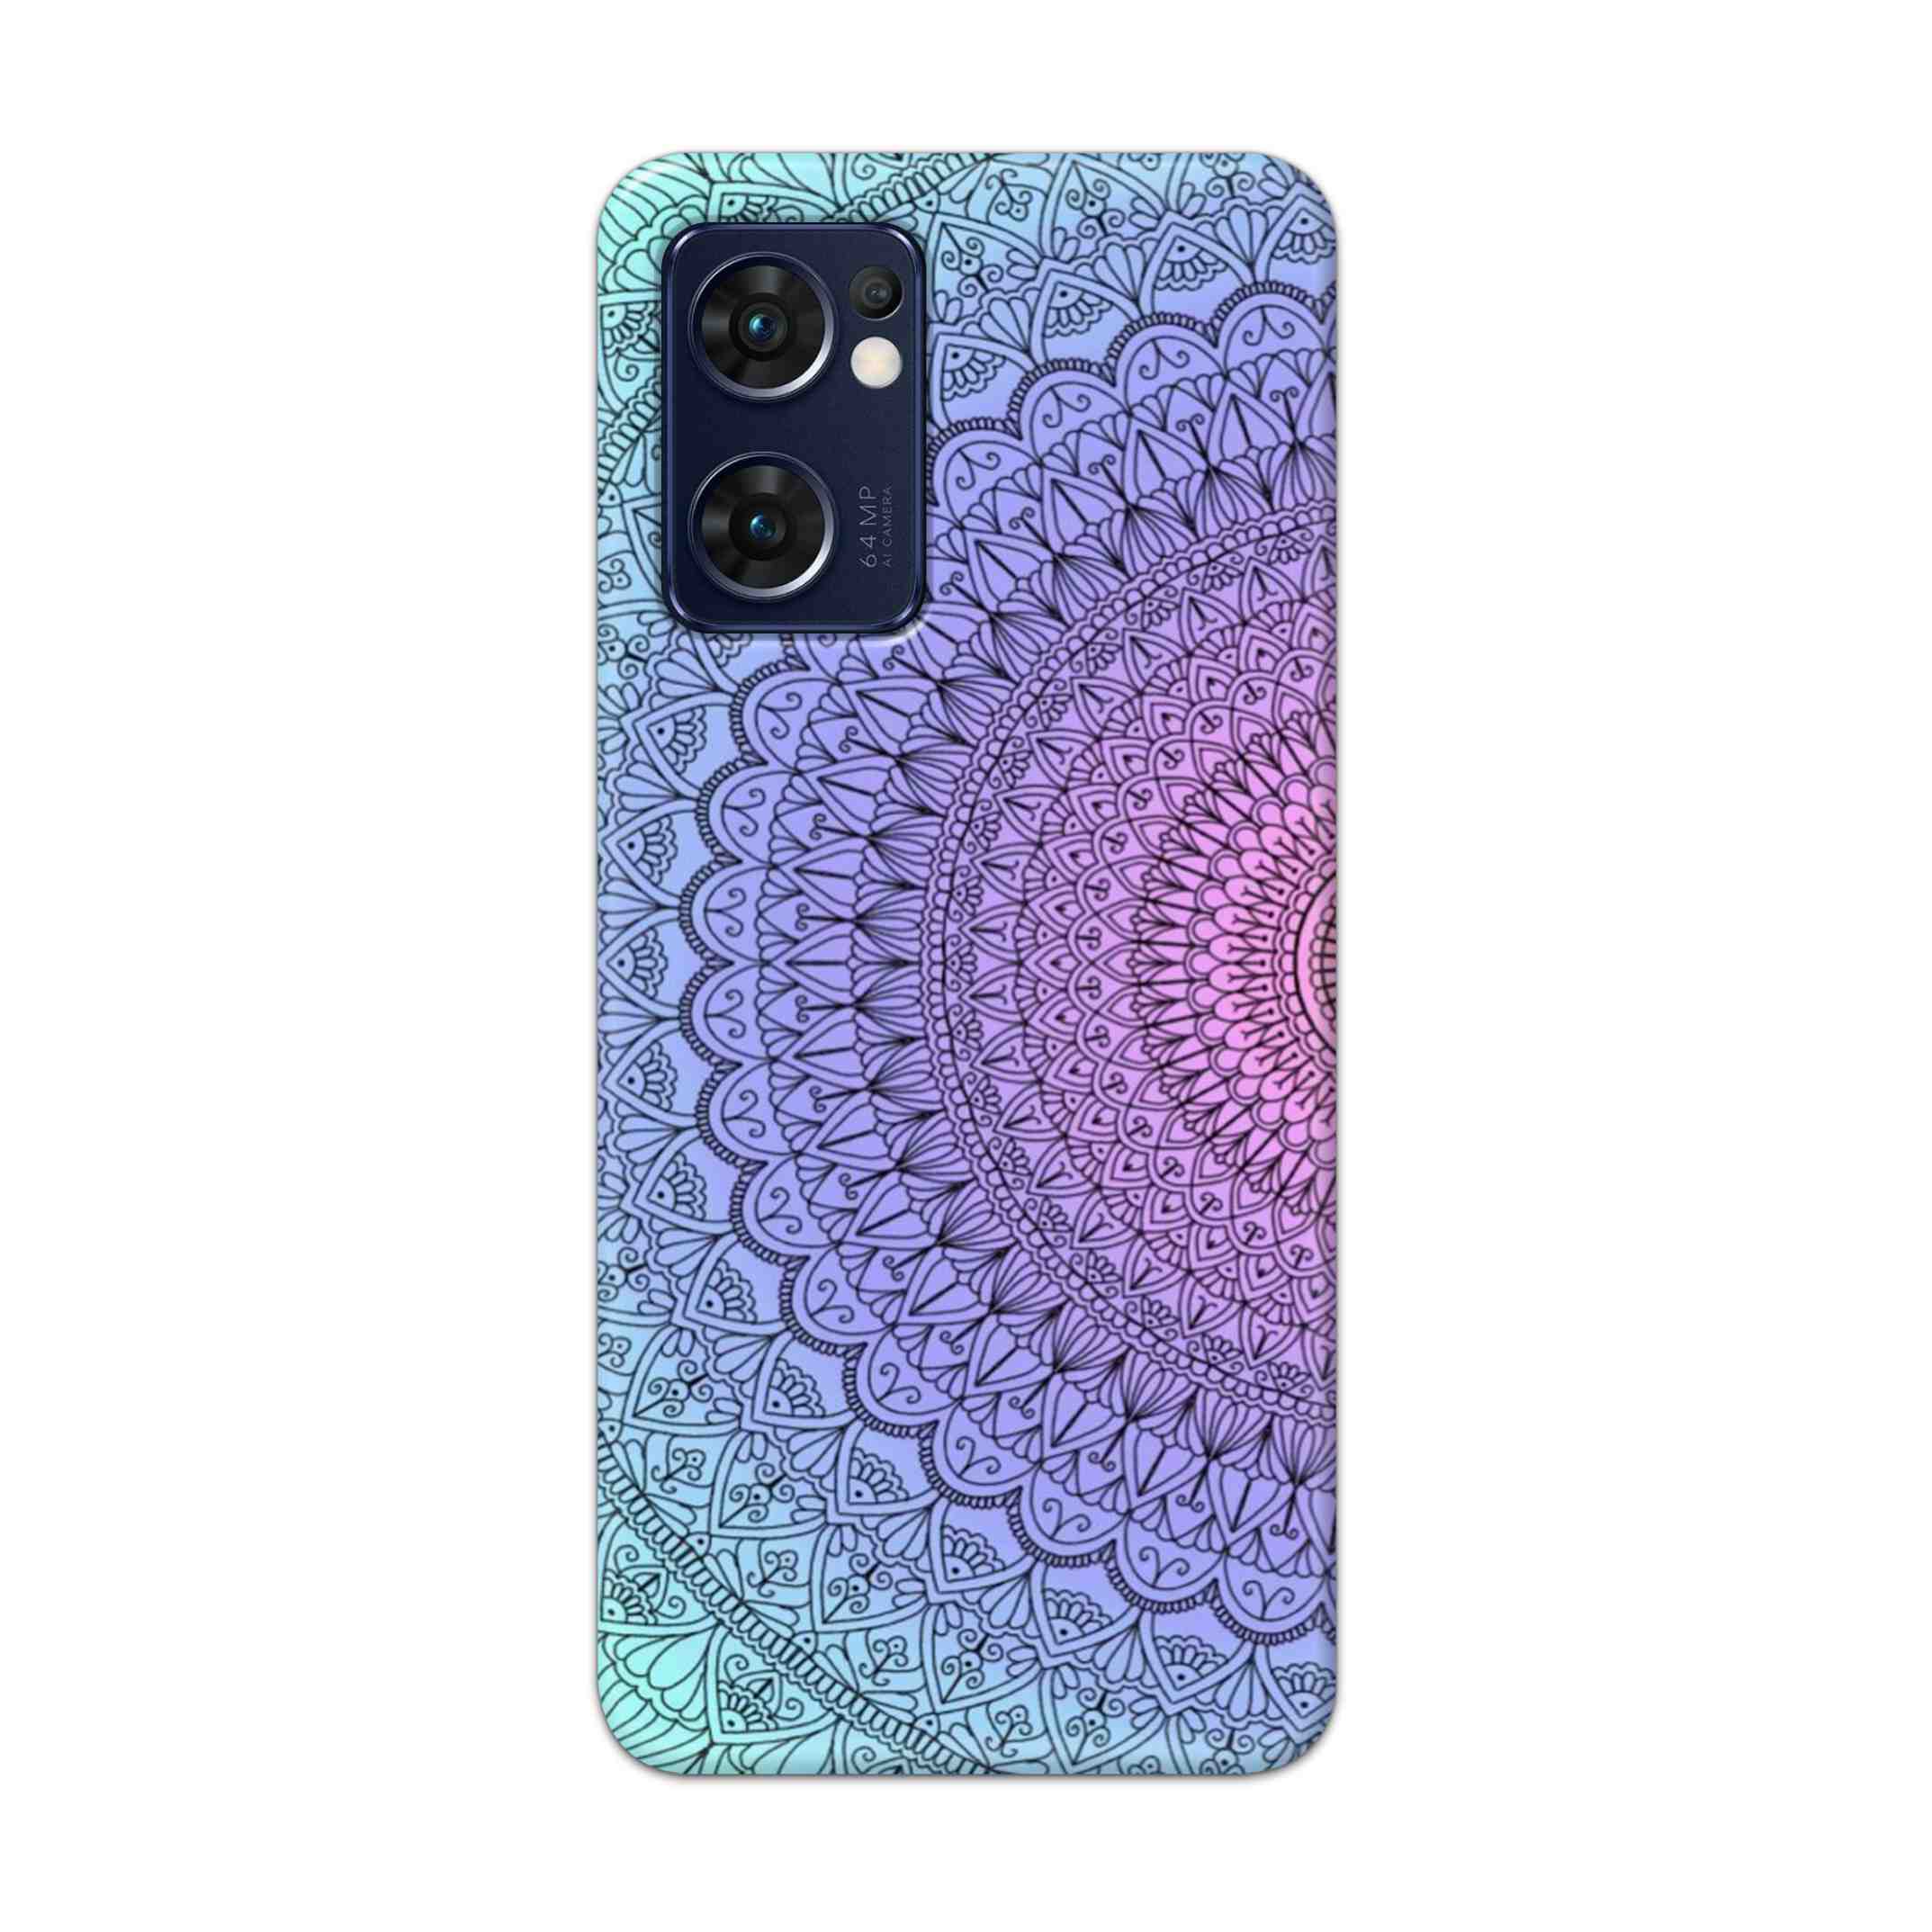 Buy Colourful Mandala Hard Back Mobile Phone Case Cover For Reno 7 5G Online